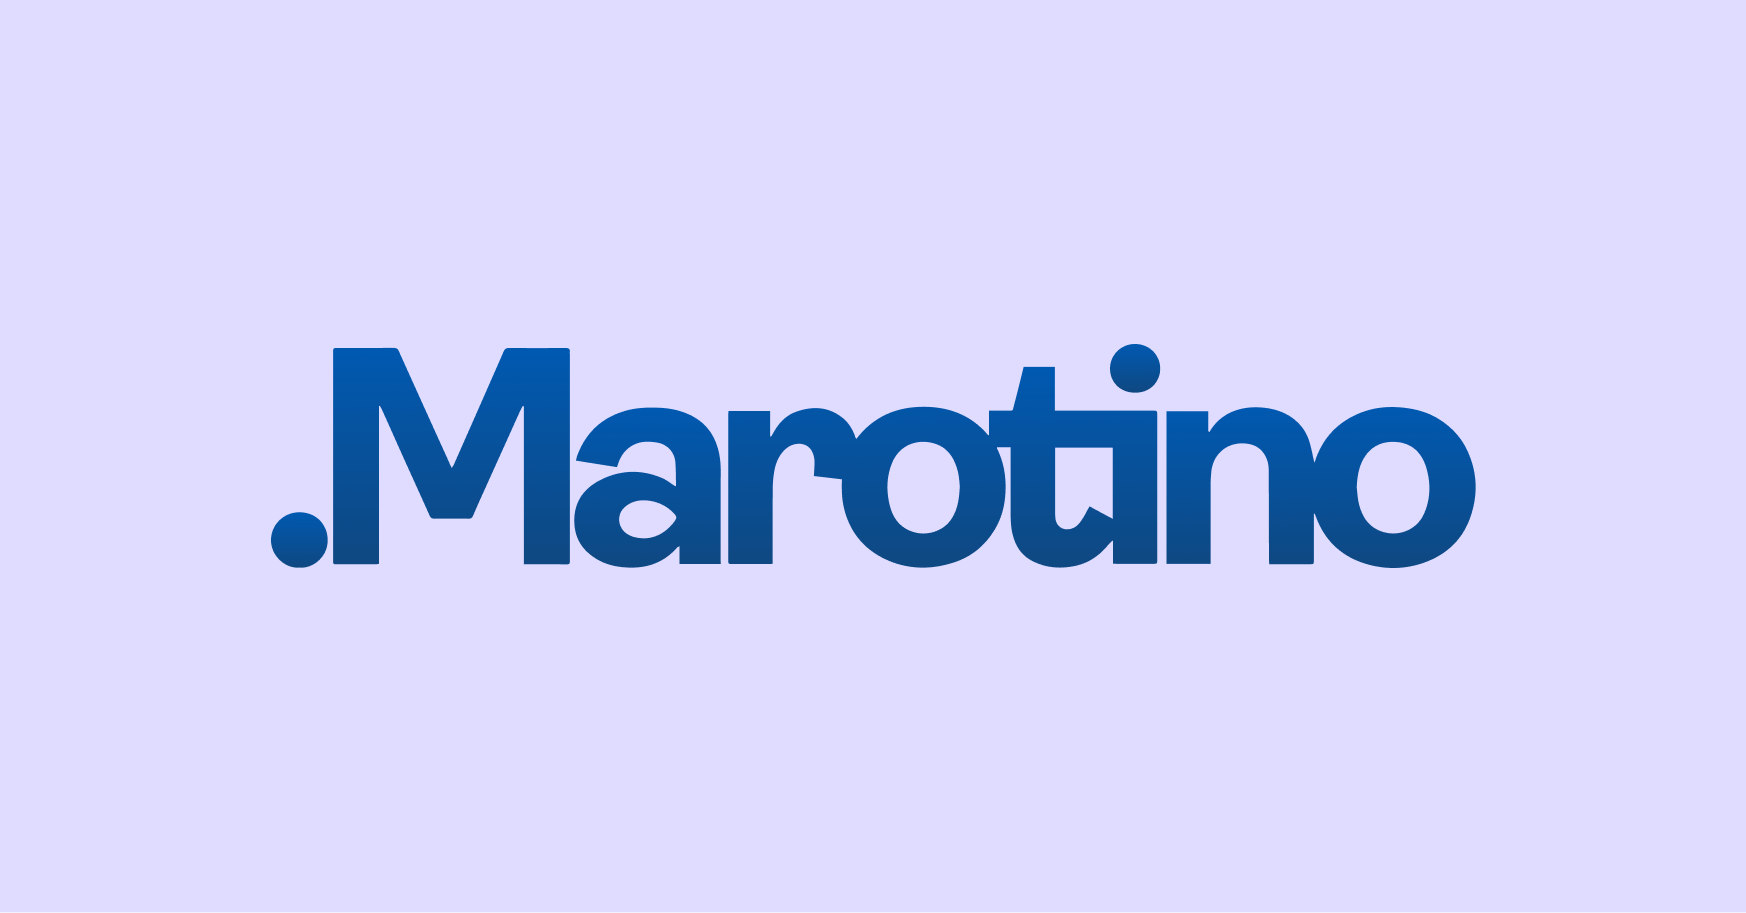 Agency Marotino logo with background